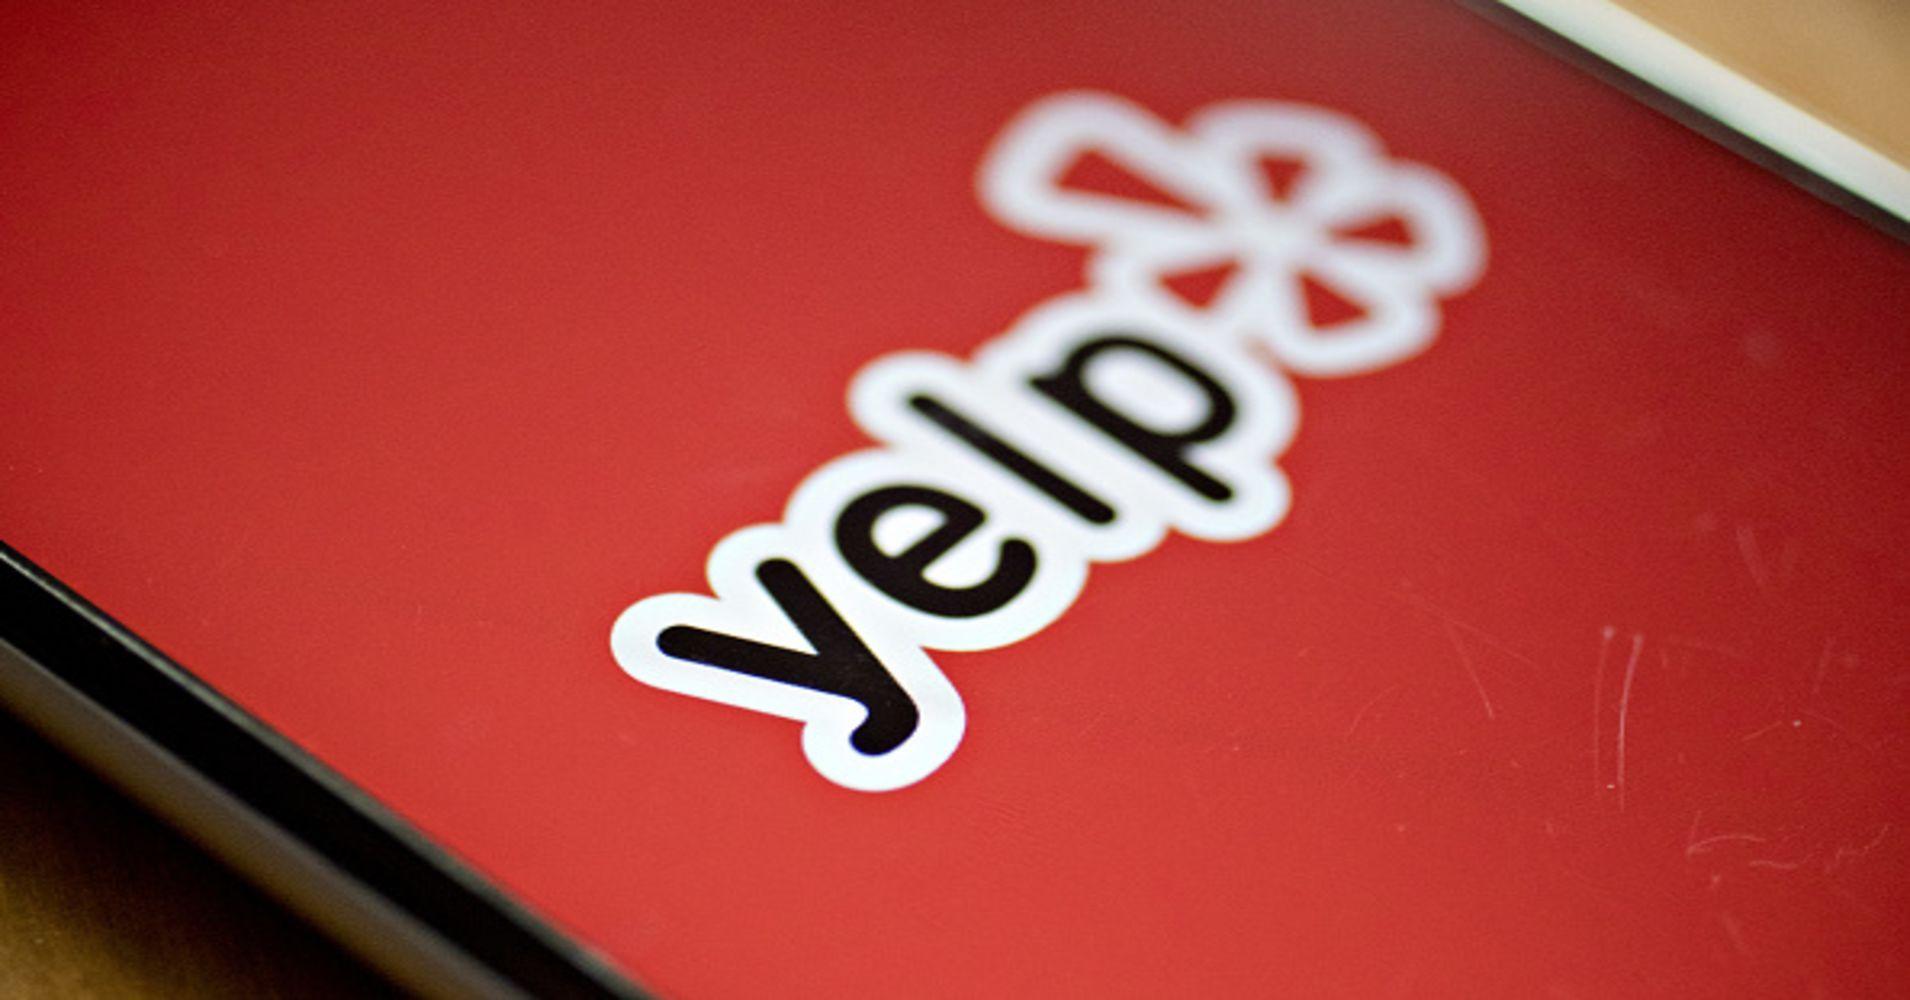 Hires Yelp Logo - Yelp is fundamentally challenged, says Mark Mahaney